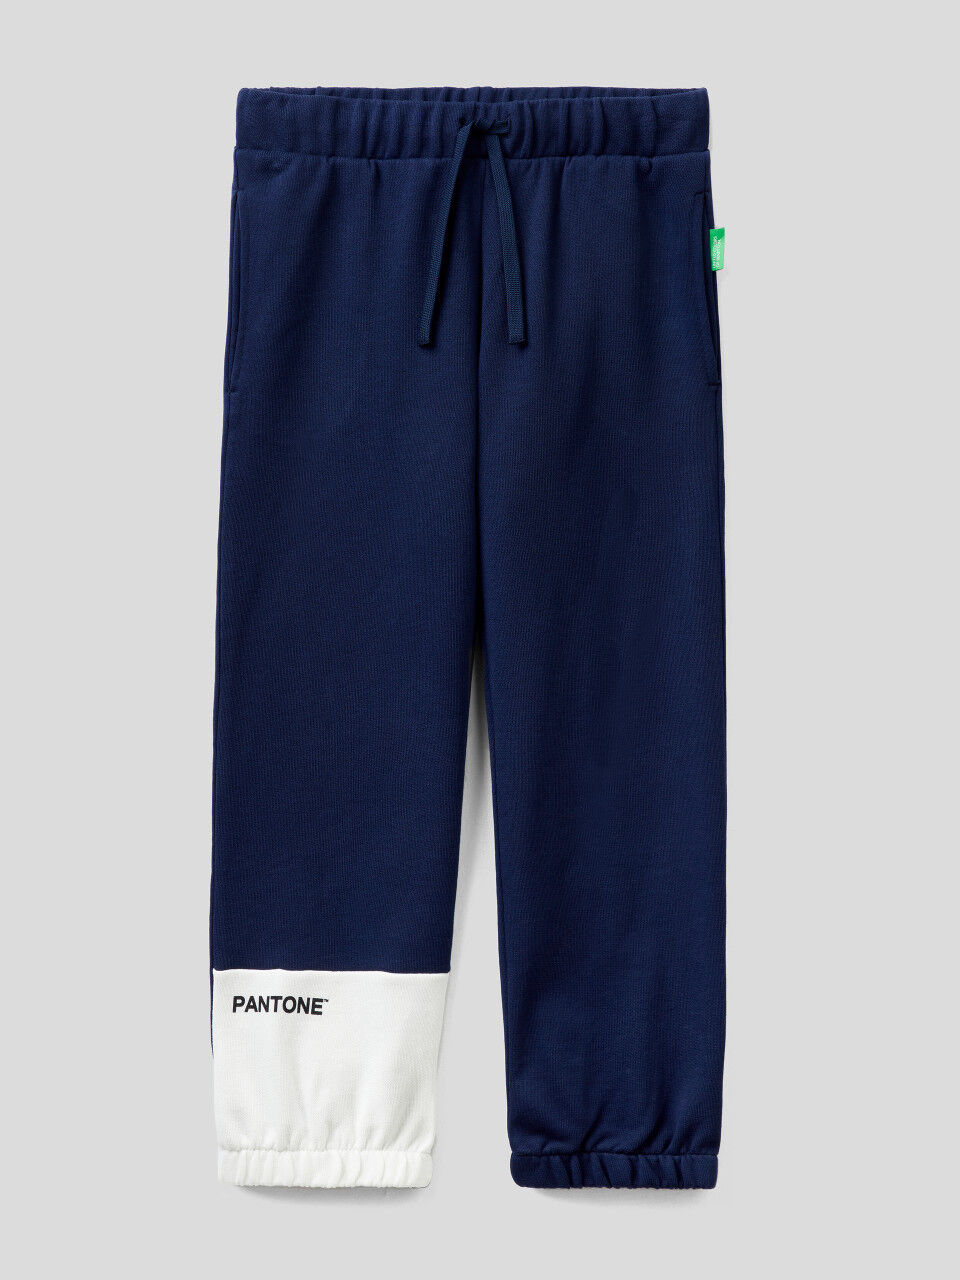 BenettonxPantone™ dark blue sweatpants